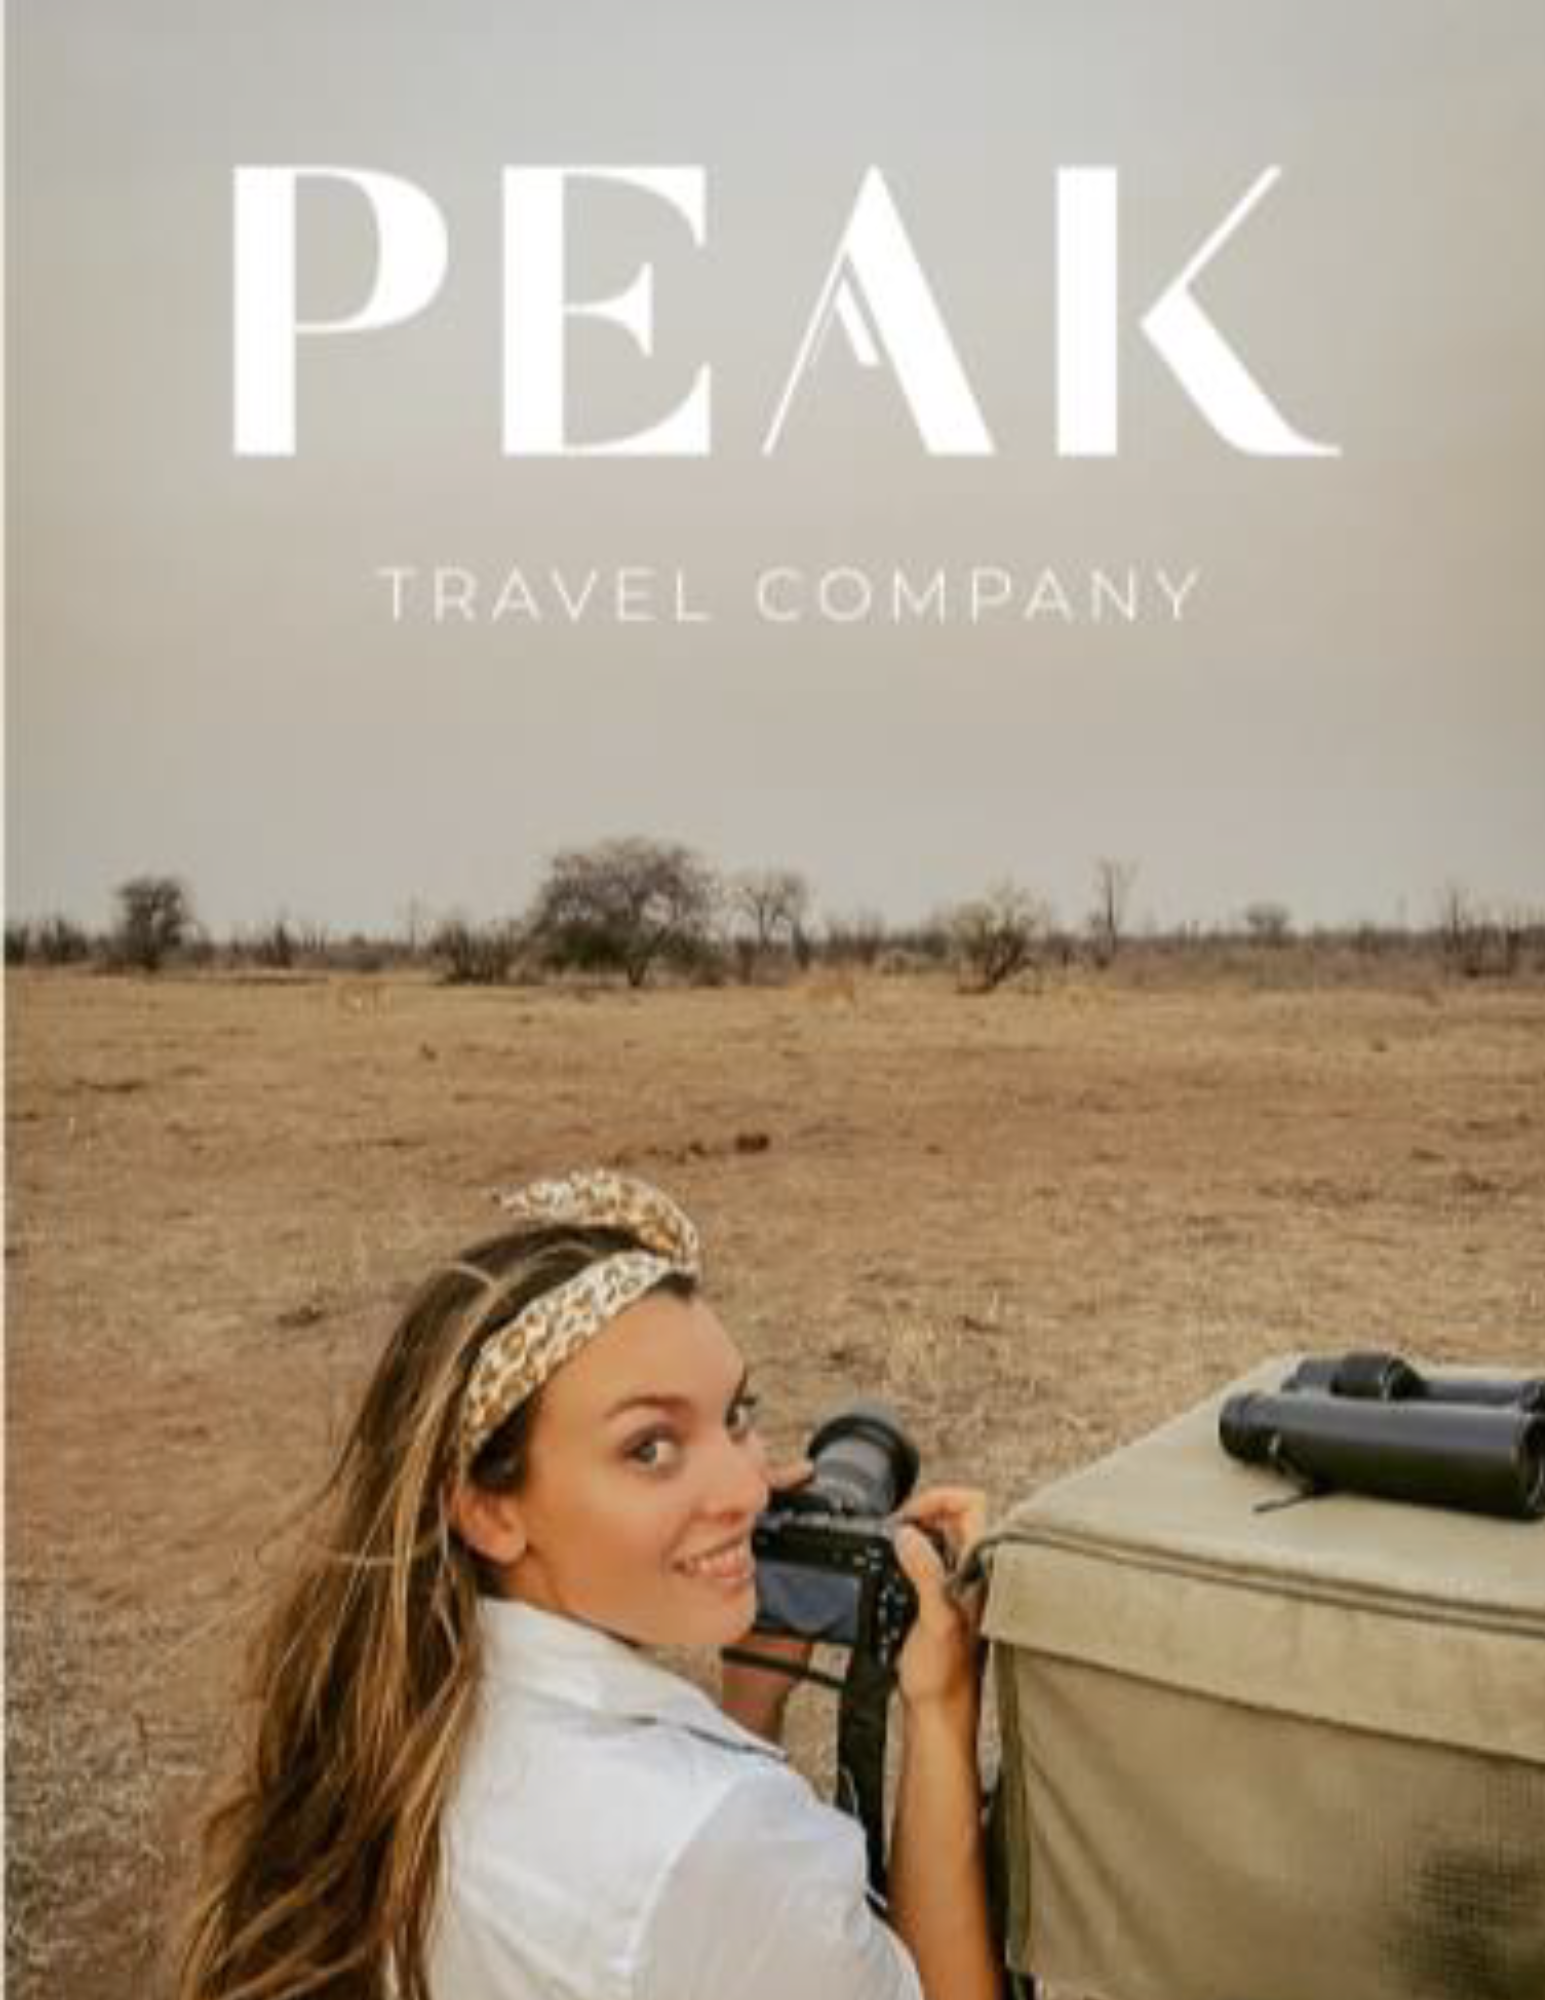 Coastline Travel Group Welcomes Stephanie Schaeberle, Founder of PEAK Travel Company.